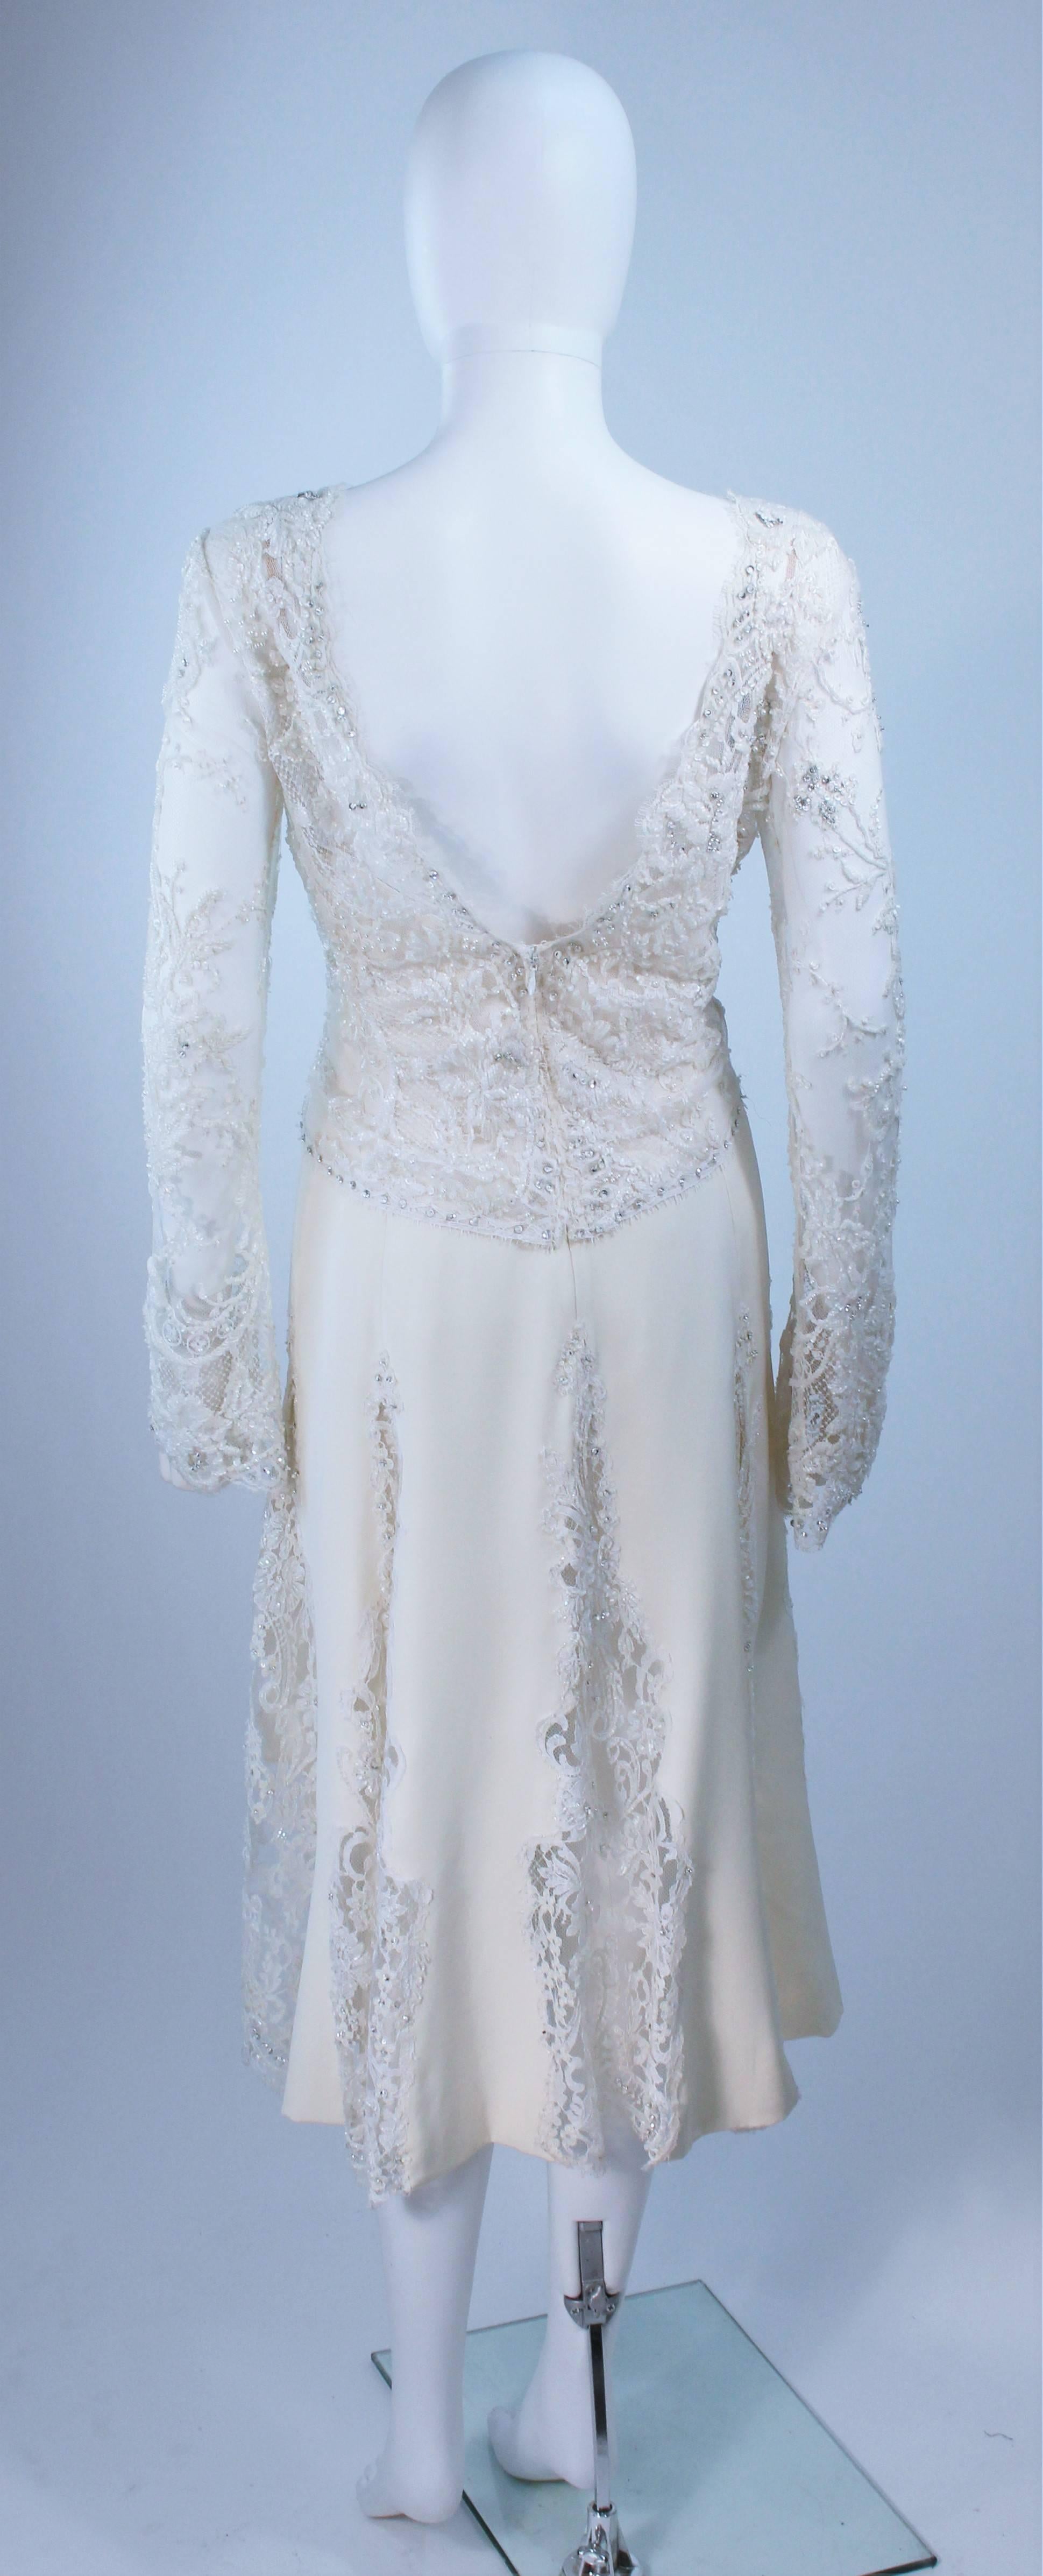 FE ZANDI White Lace Silk Embellished Dress Size 6 For Sale 3